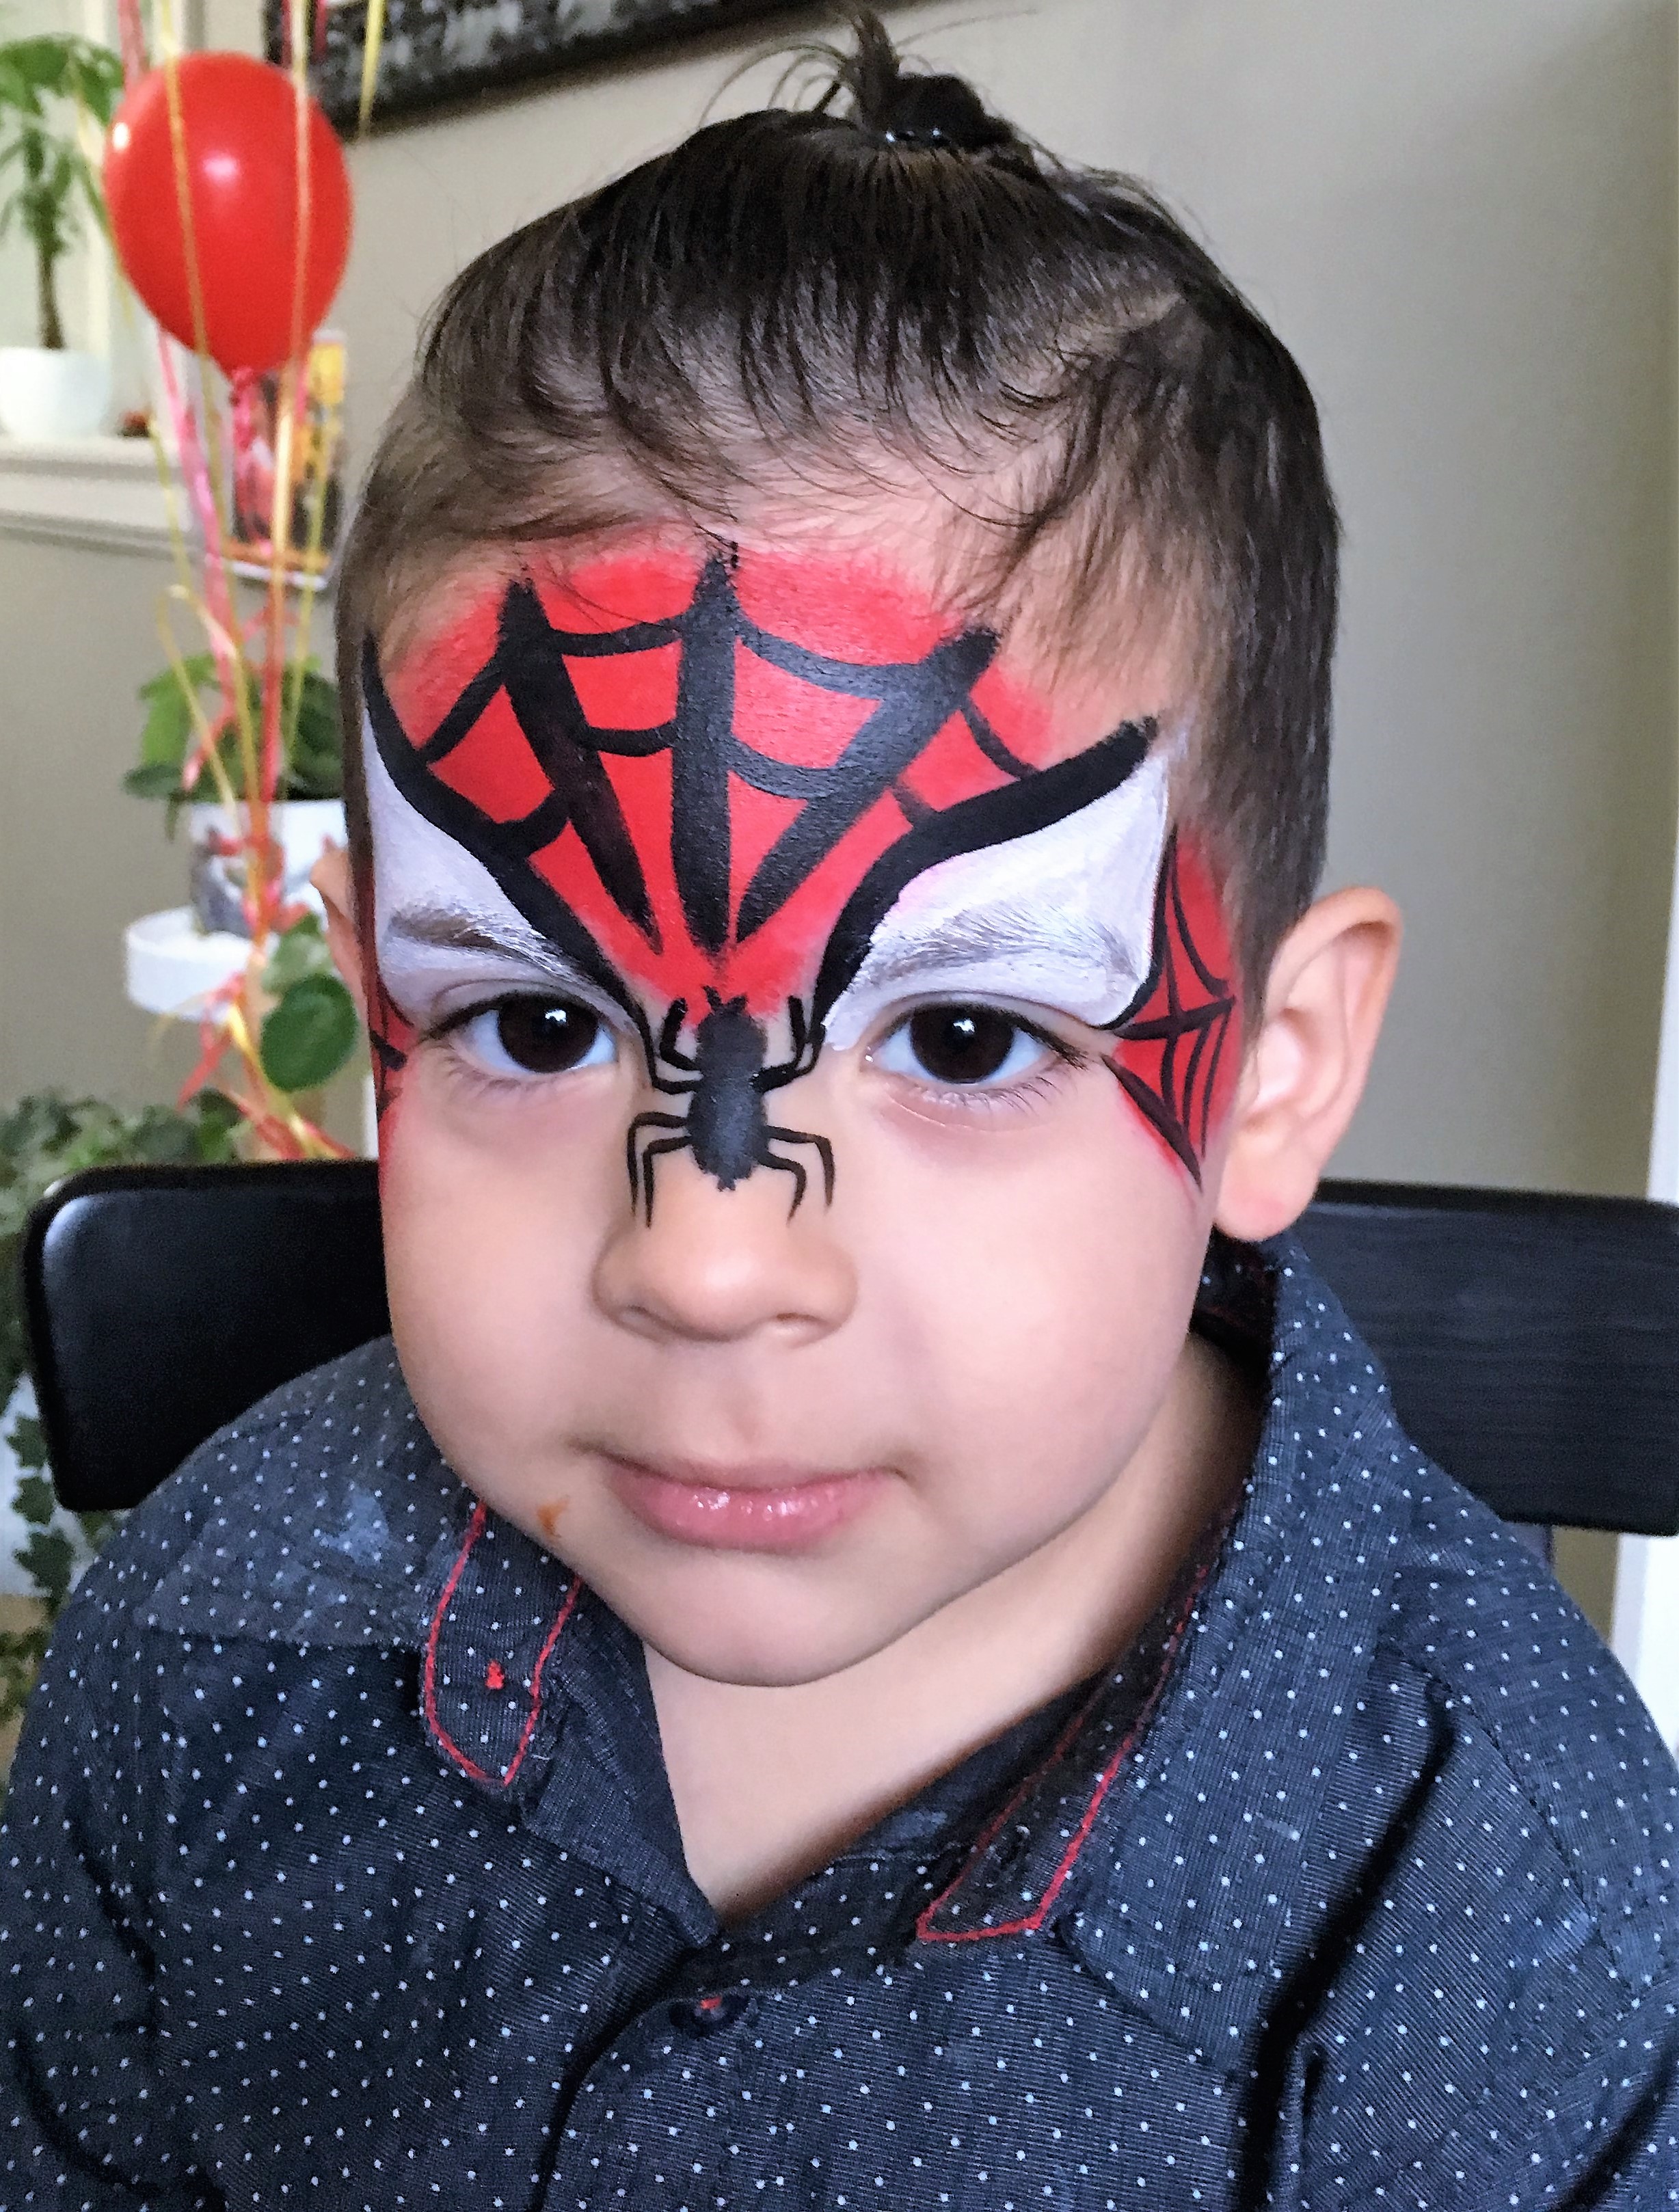 spiderman cheek face painting